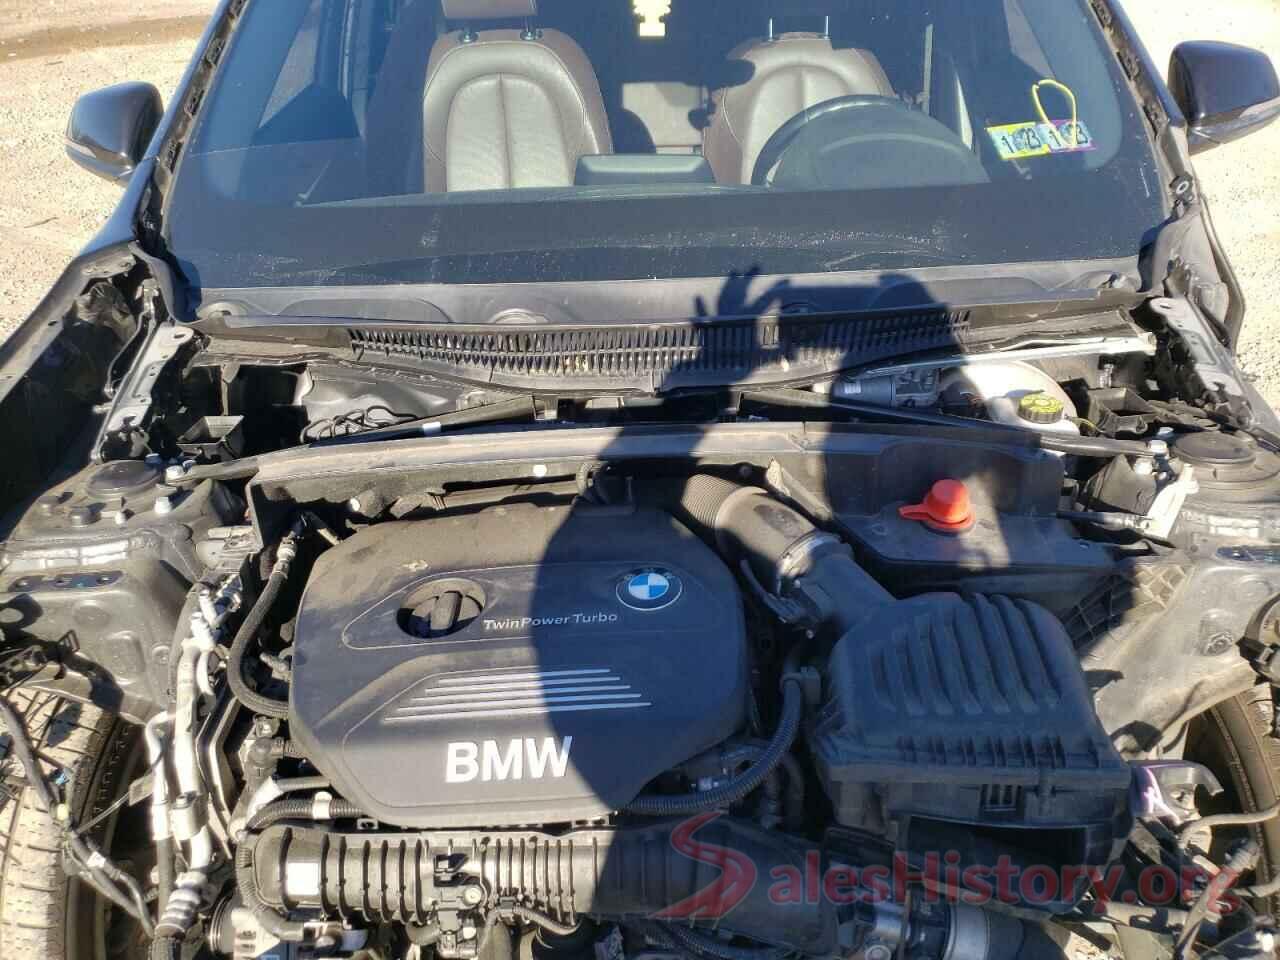 WBXHT3C38H5F86193 2017 BMW X1